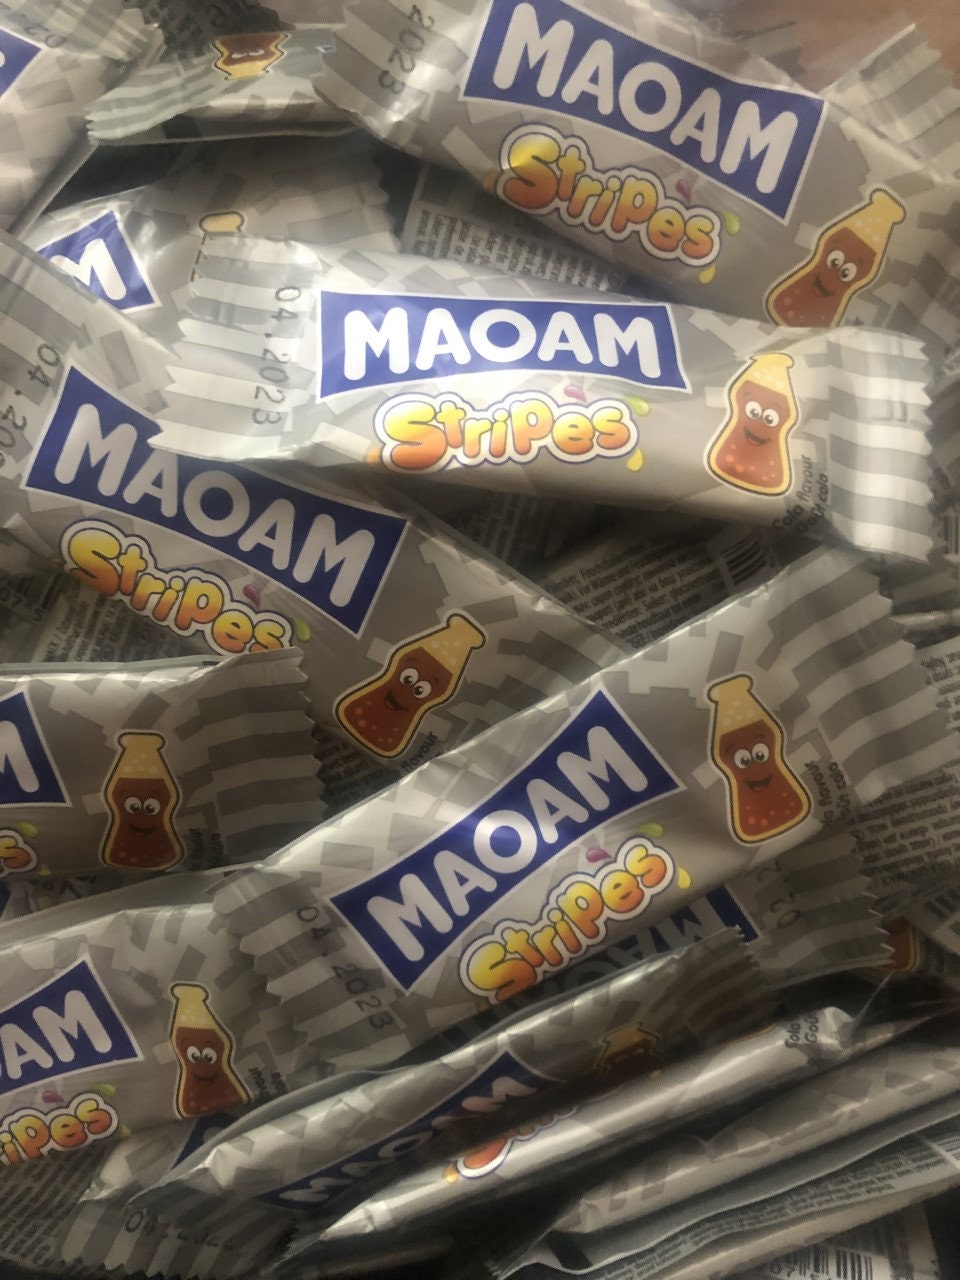 Maoam Stripes x 1 Random Flavour